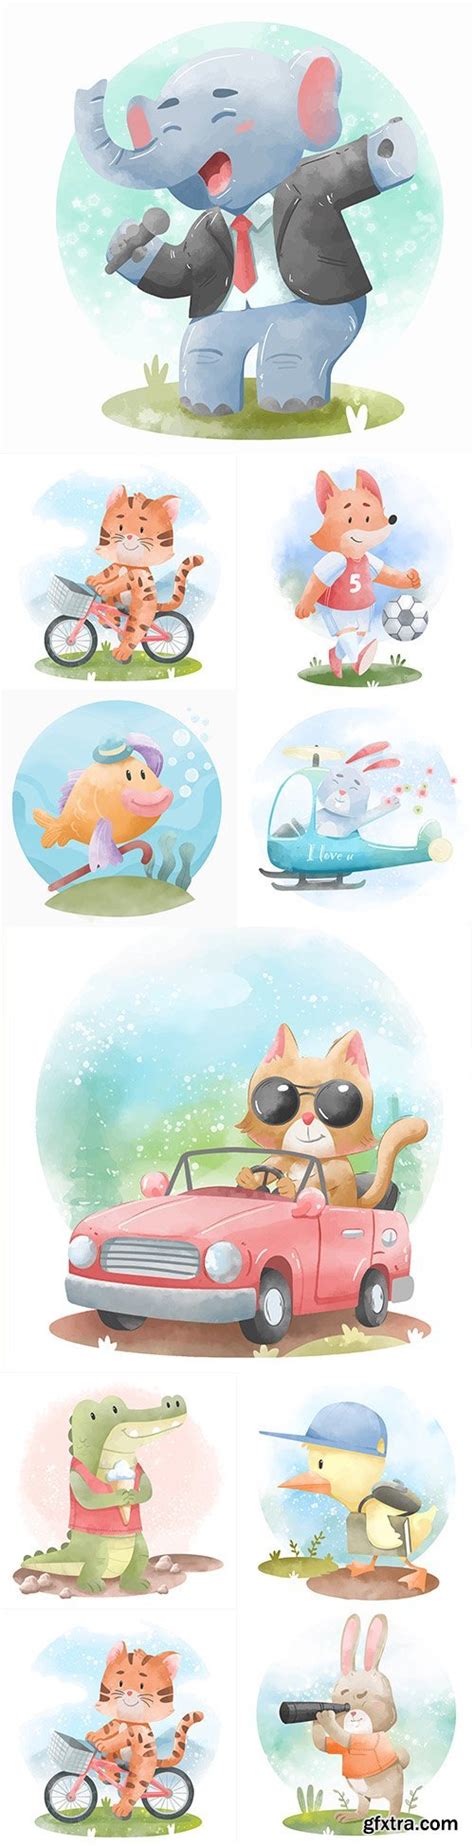 Cute Cartoon Animals Watercolor Illustrations 6 Gfxtra